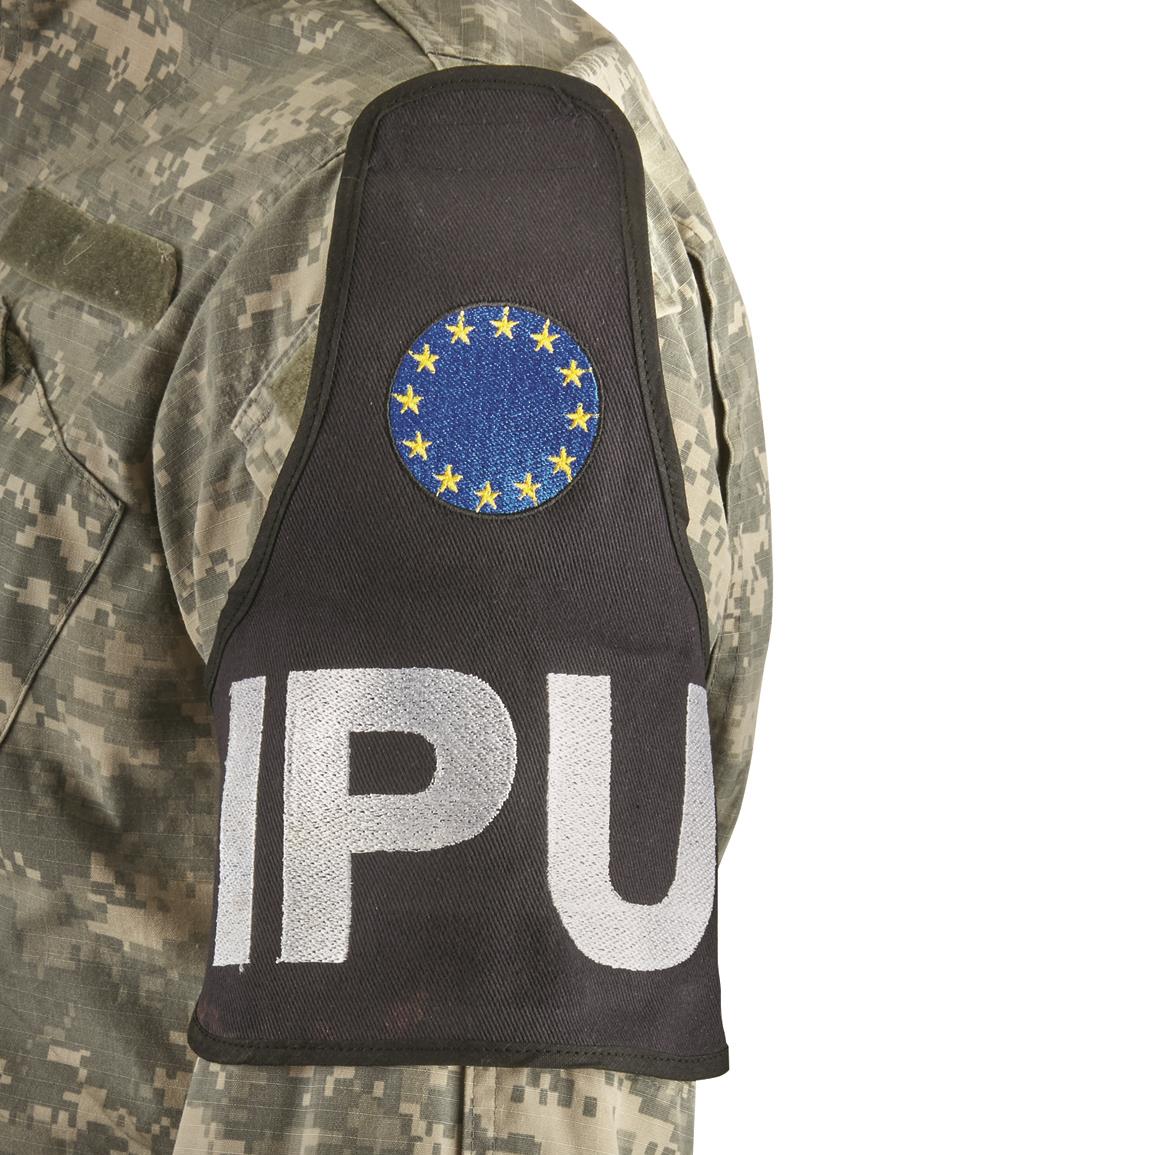 European Gendarmerie Military Surplus IPU Police Armbands, 4 Pack, New